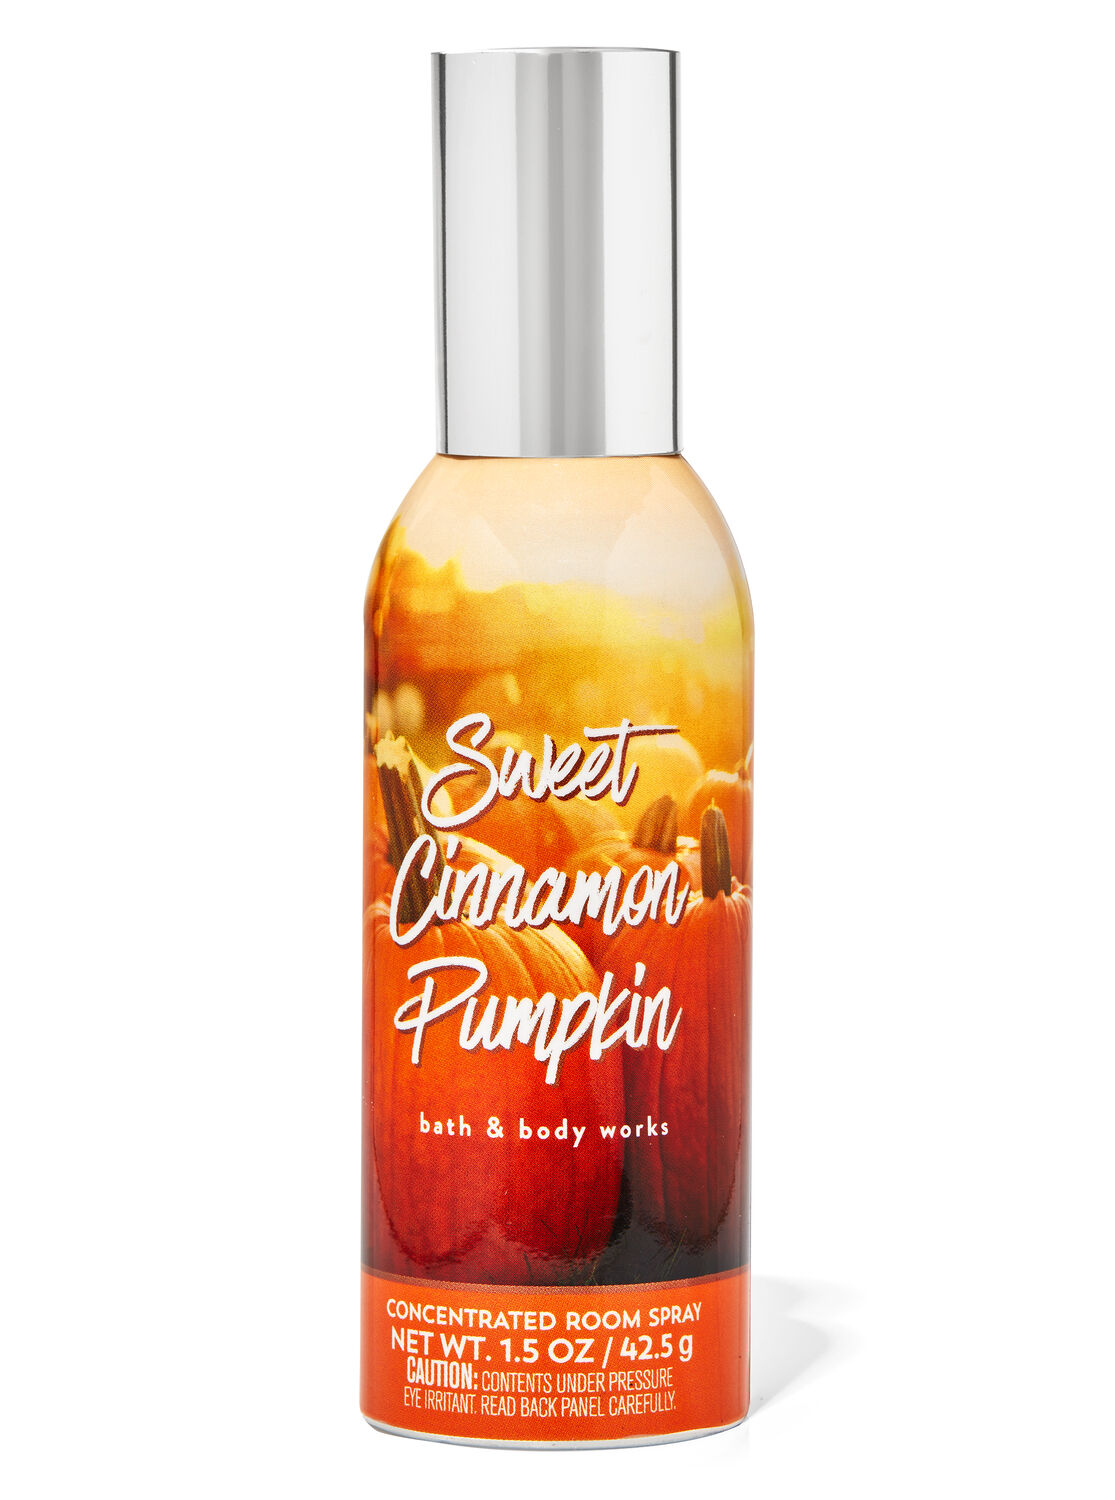 Sweet Cinnamon Pumpkin Concentrated Room Spray